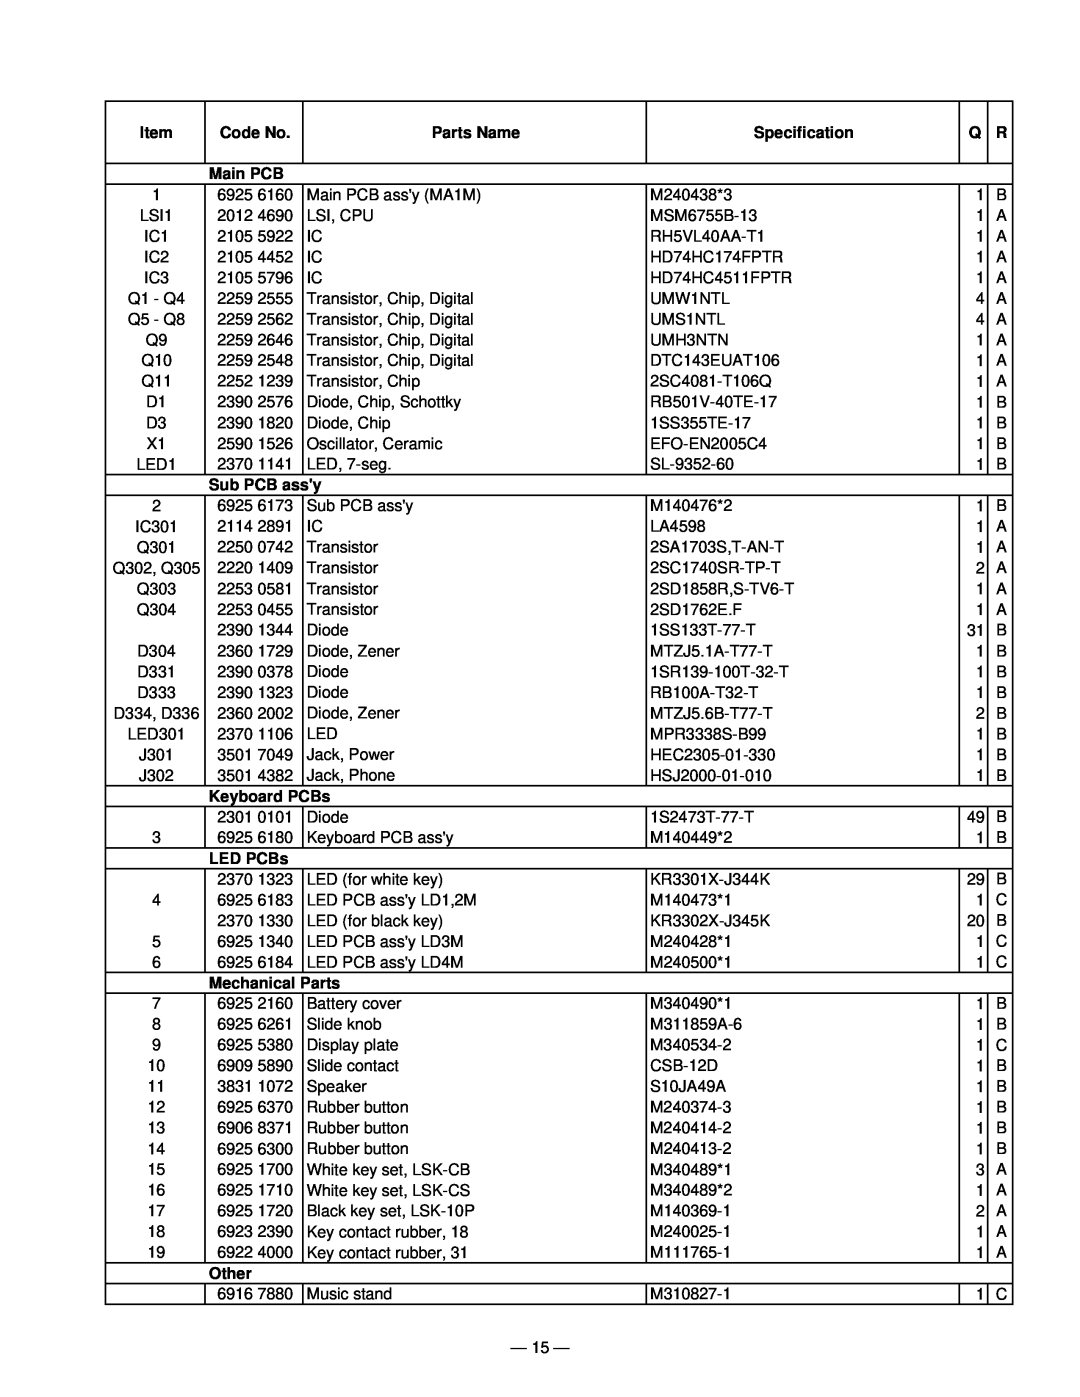 Casio CTK-220L manual Code No, Parts Name, Specification, Main PCB, Sub PCB assy, Keyboard PCBs, LED PCBs, Mechanical Parts 